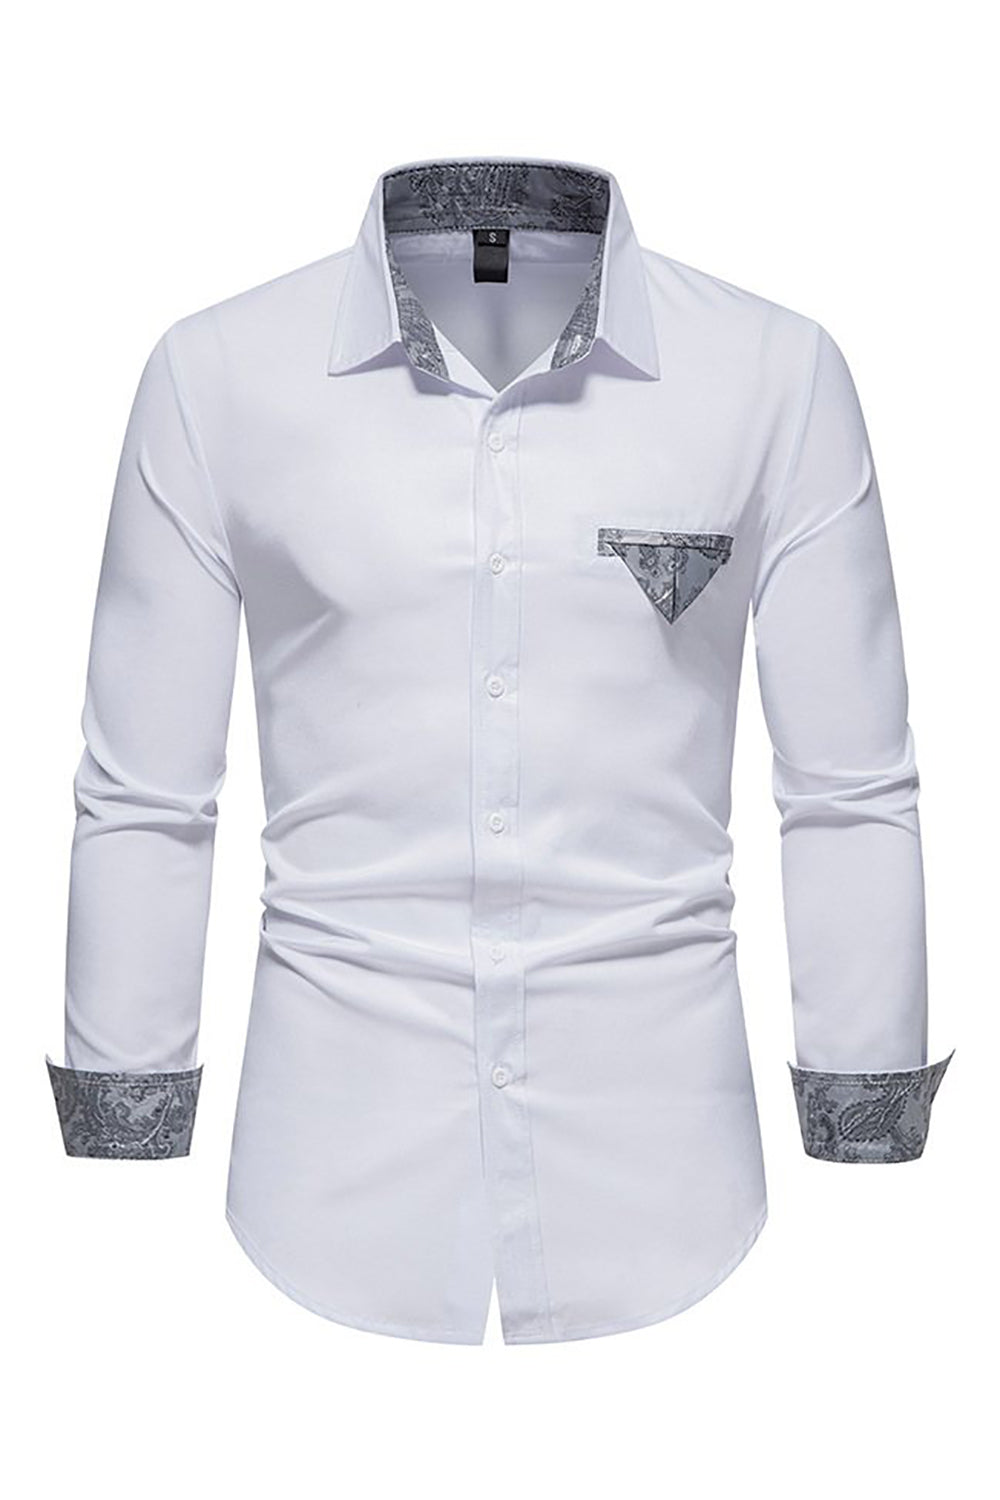 Long Sleeve Printed Men's Casual Shirt